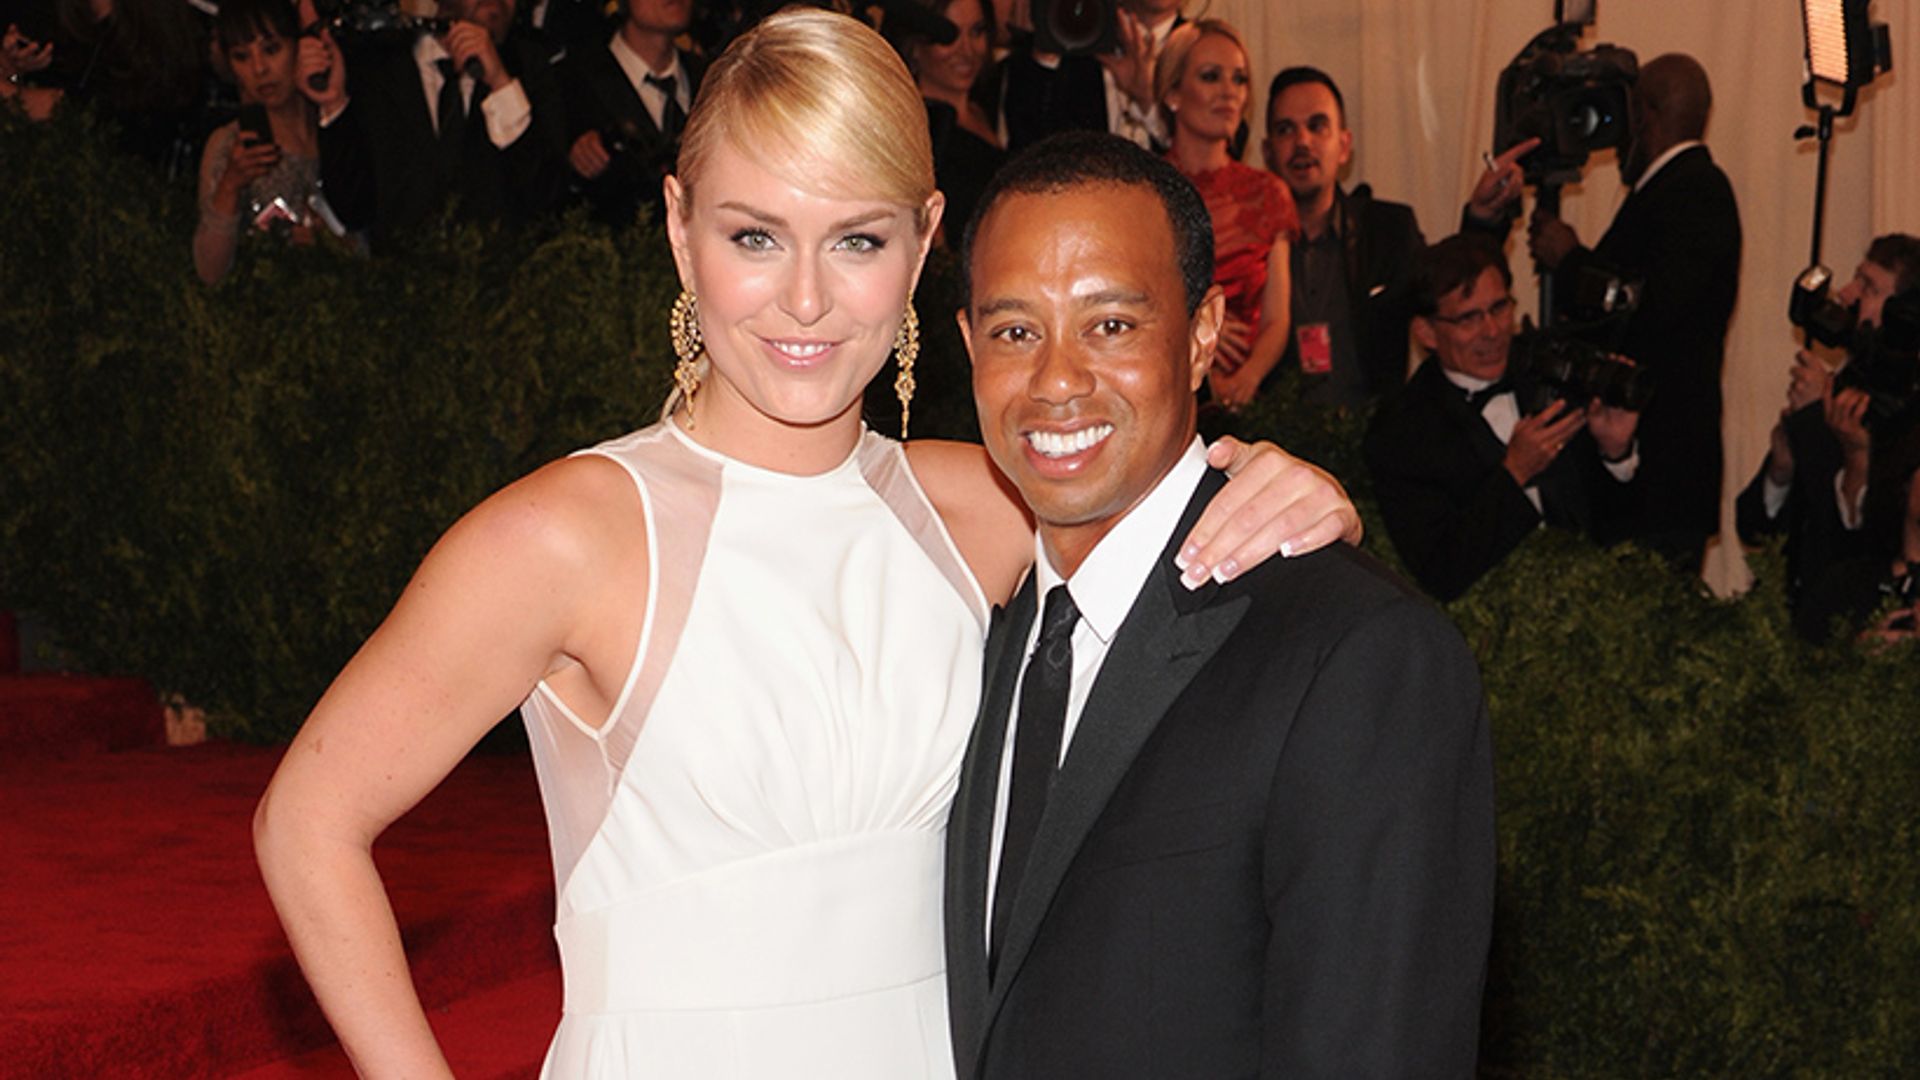 Tiger Woods ex-girlfriend Lindsey Vonn responds to leaked photos HELLO!